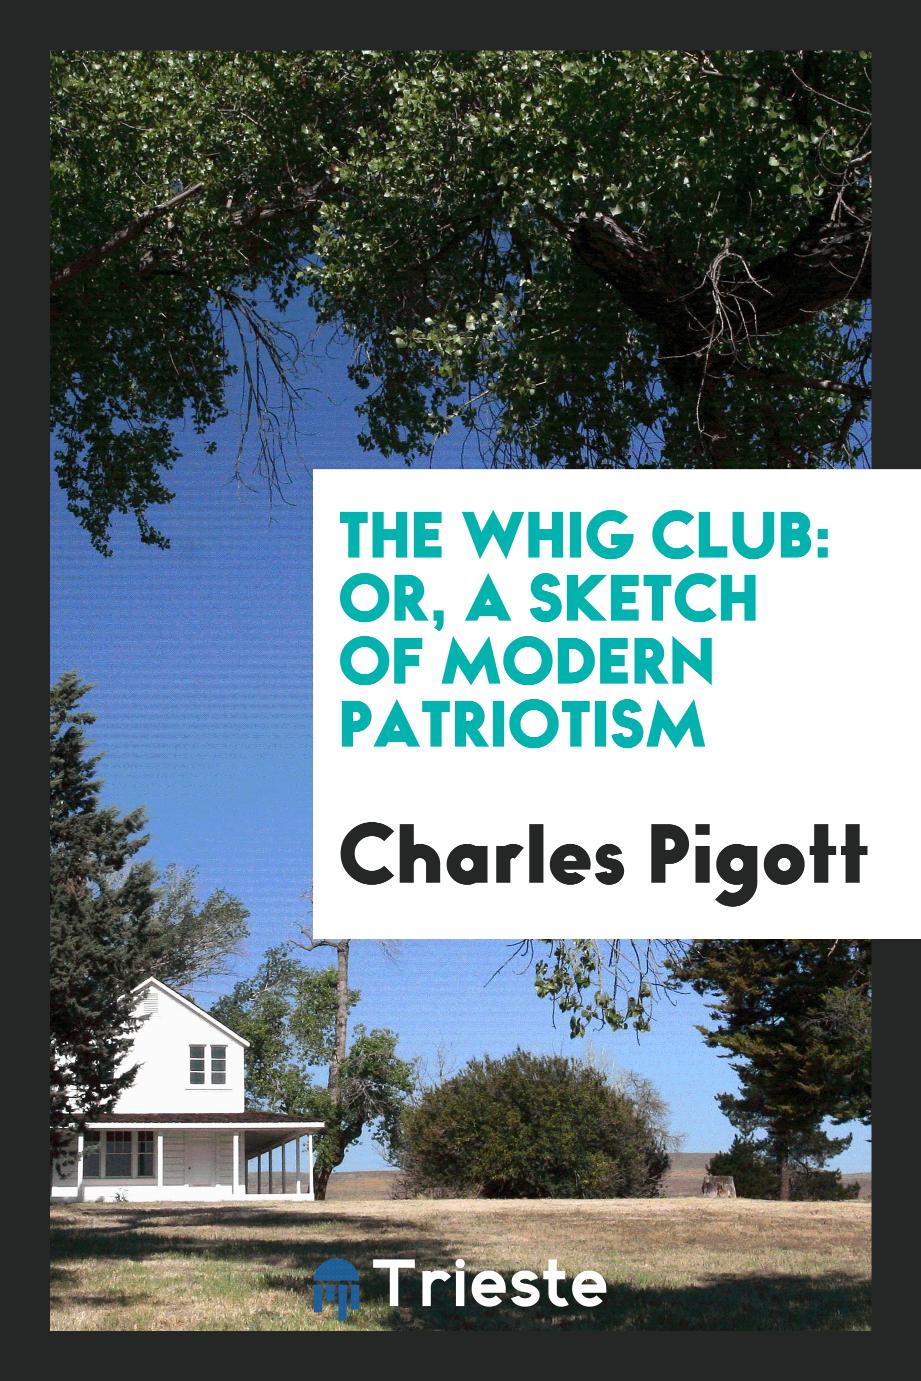 The Whig Club: Or, a Sketch of Modern Patriotism